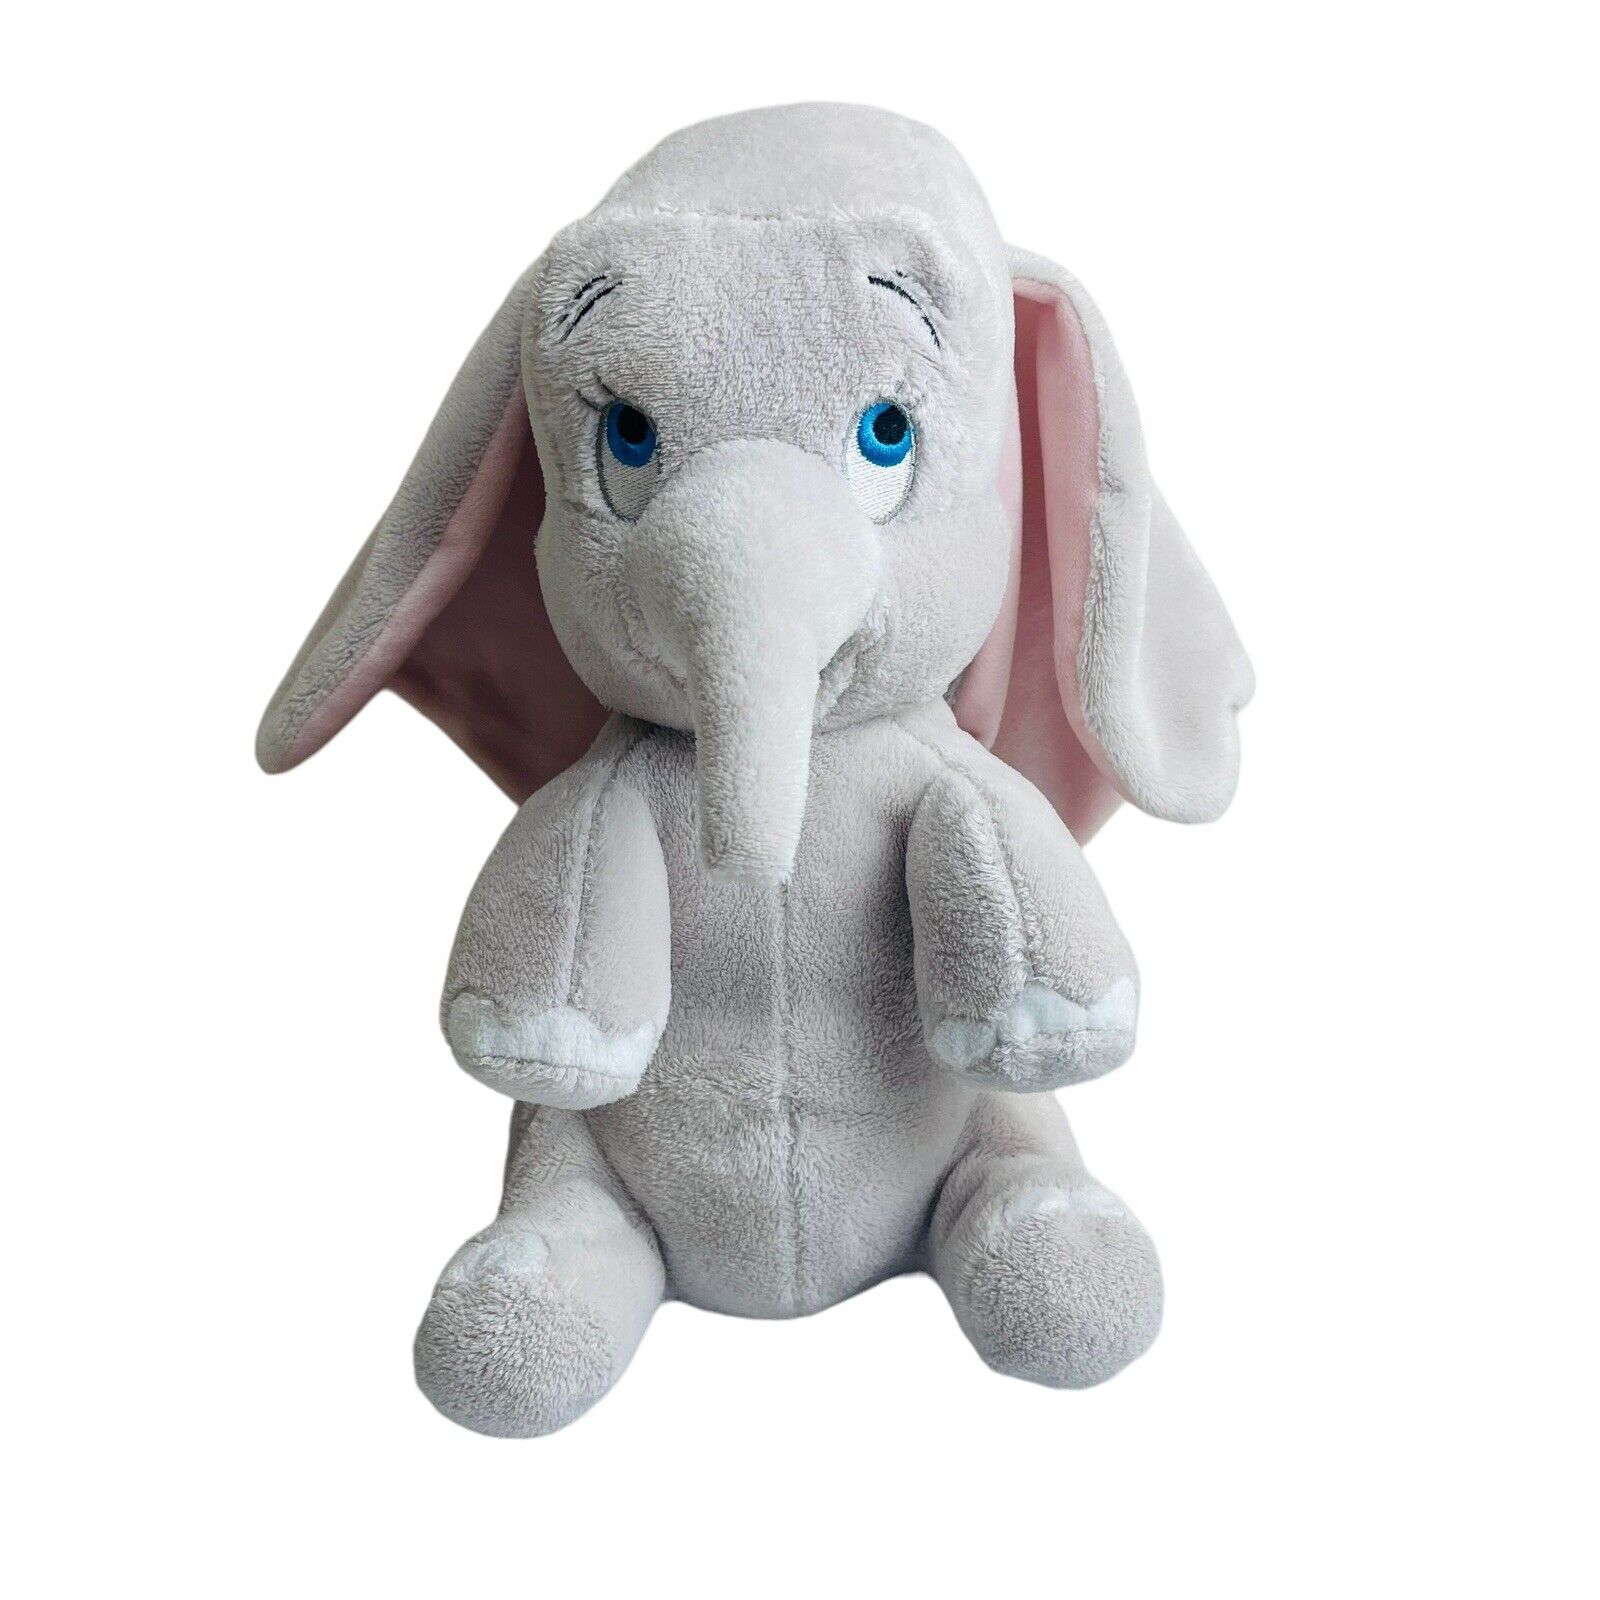 Disney Babies baby DUMBO Elephant Plush Disney Parks Stuffed Animal 10”